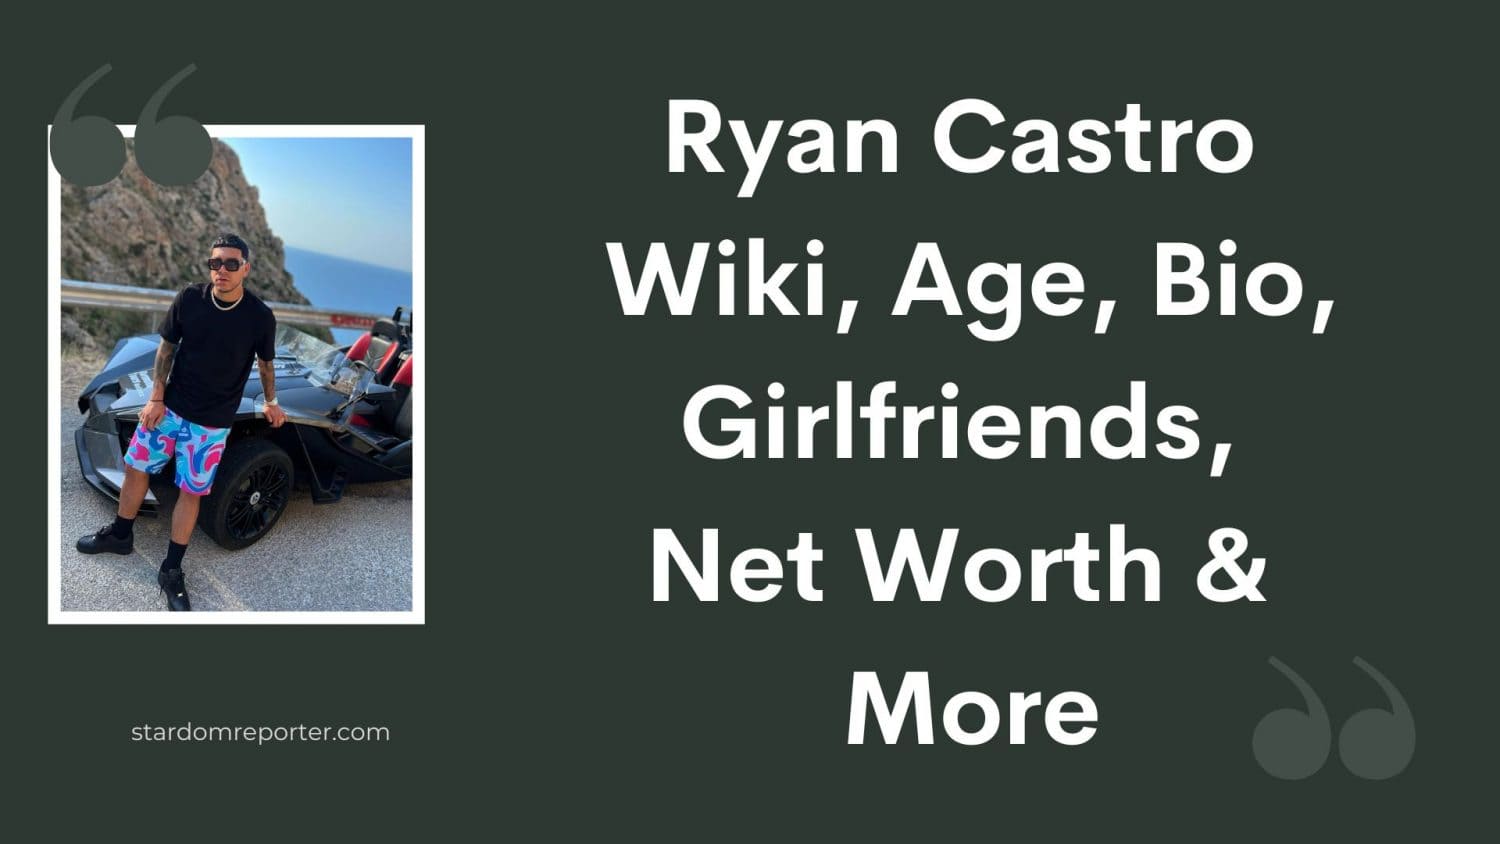 Ryan Castro Wiki, Age, Bio, Girlfriends, Net Worth & More - 9